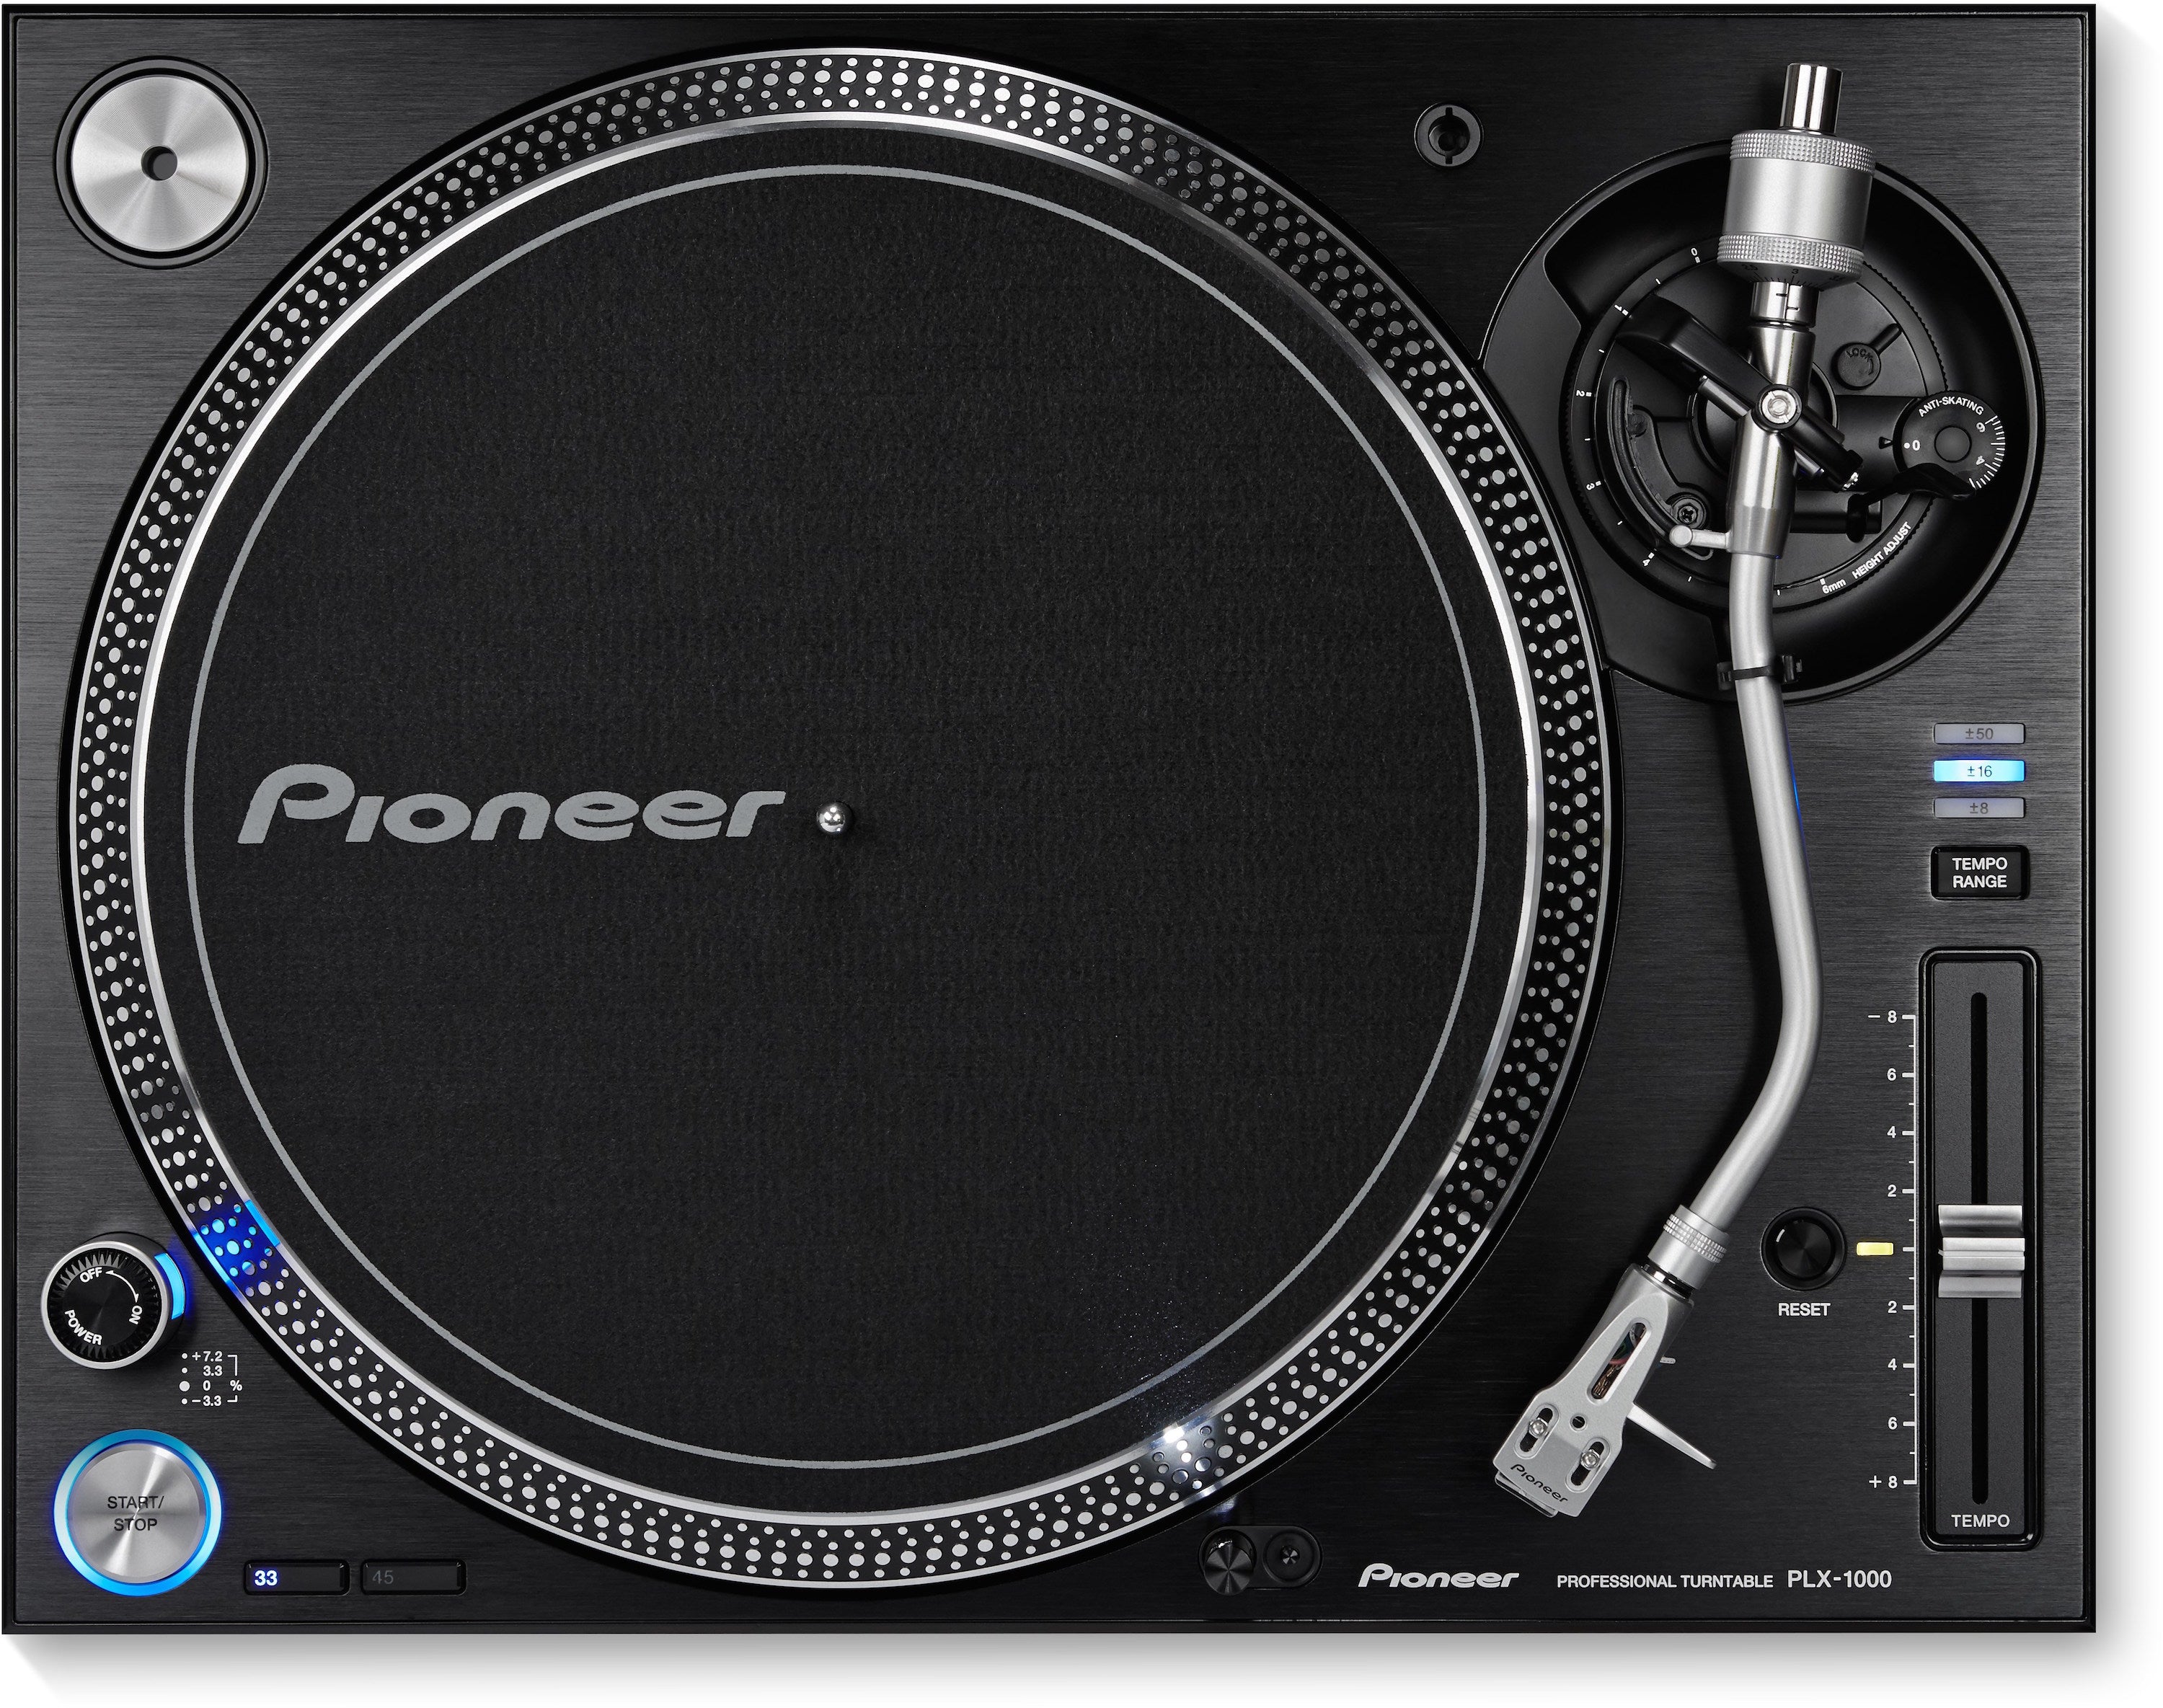 PIONEER PLX1000 Direct Drive DJ Turntable